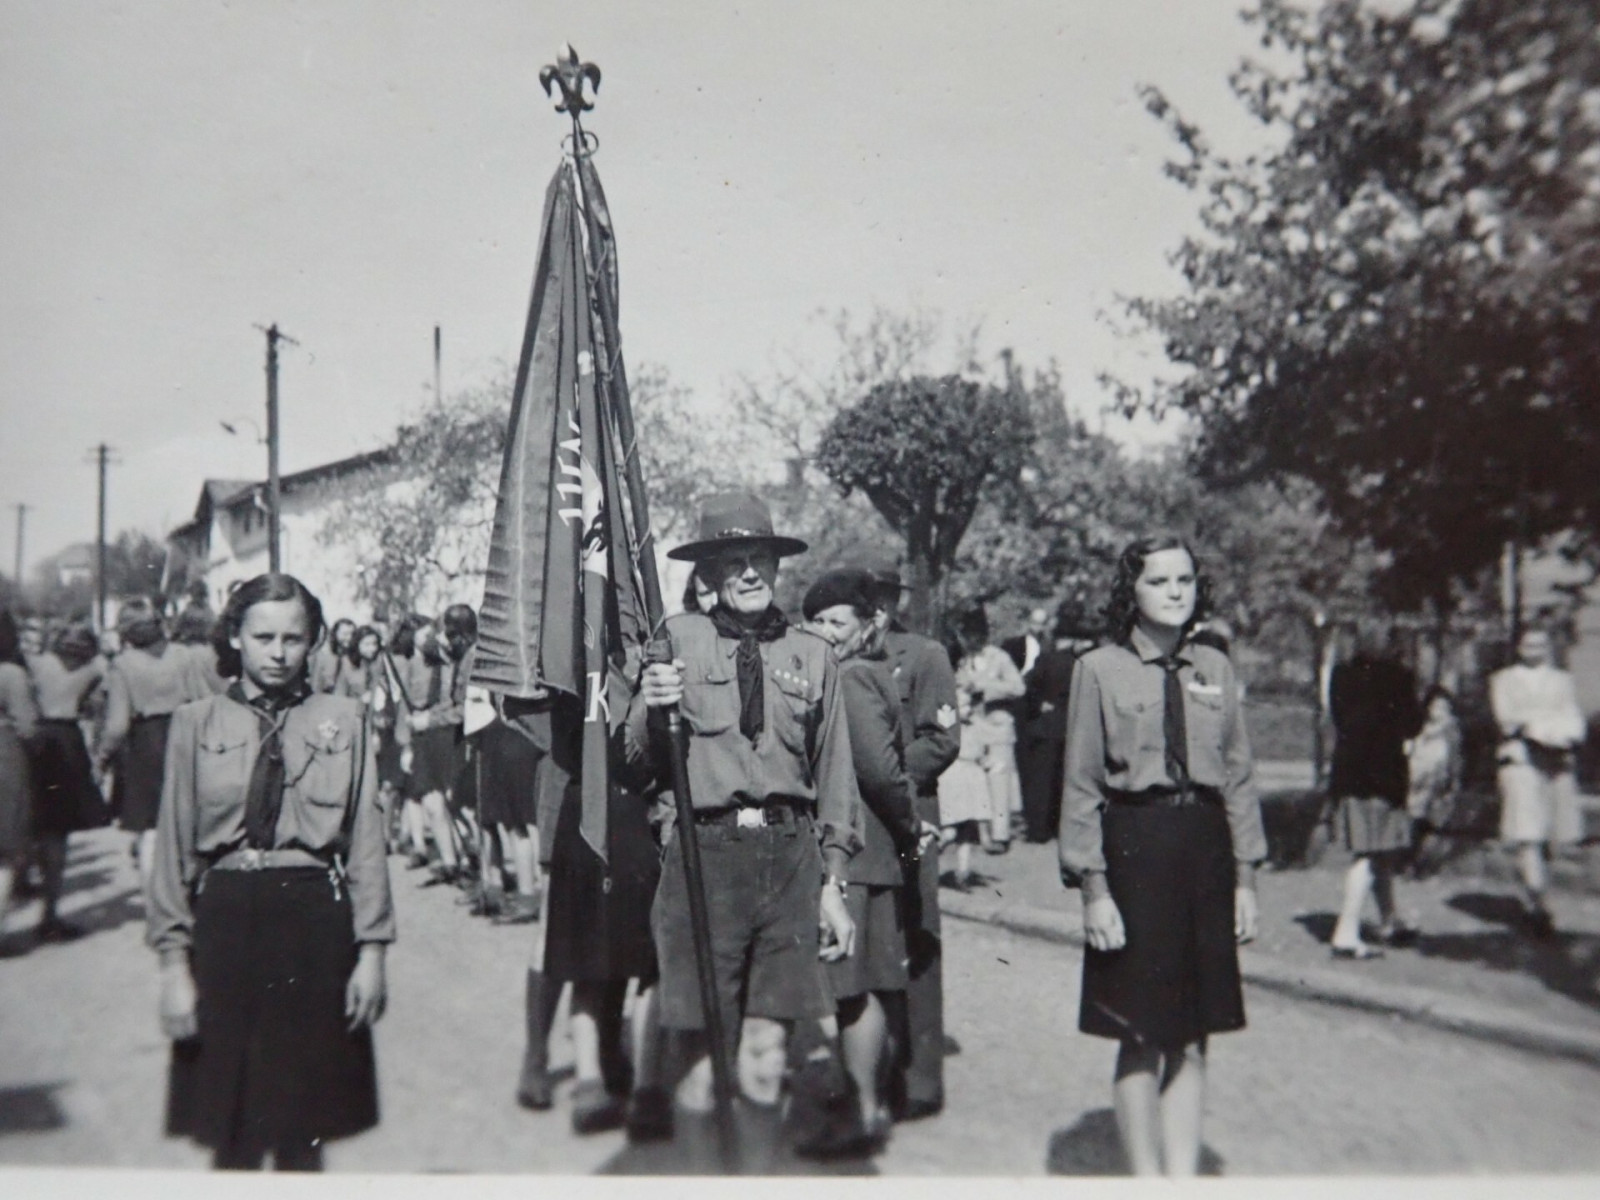 Nae prvn povlen vystoupen u pleitosti oslav Osvobozen na vlasti v kvtnu 1945